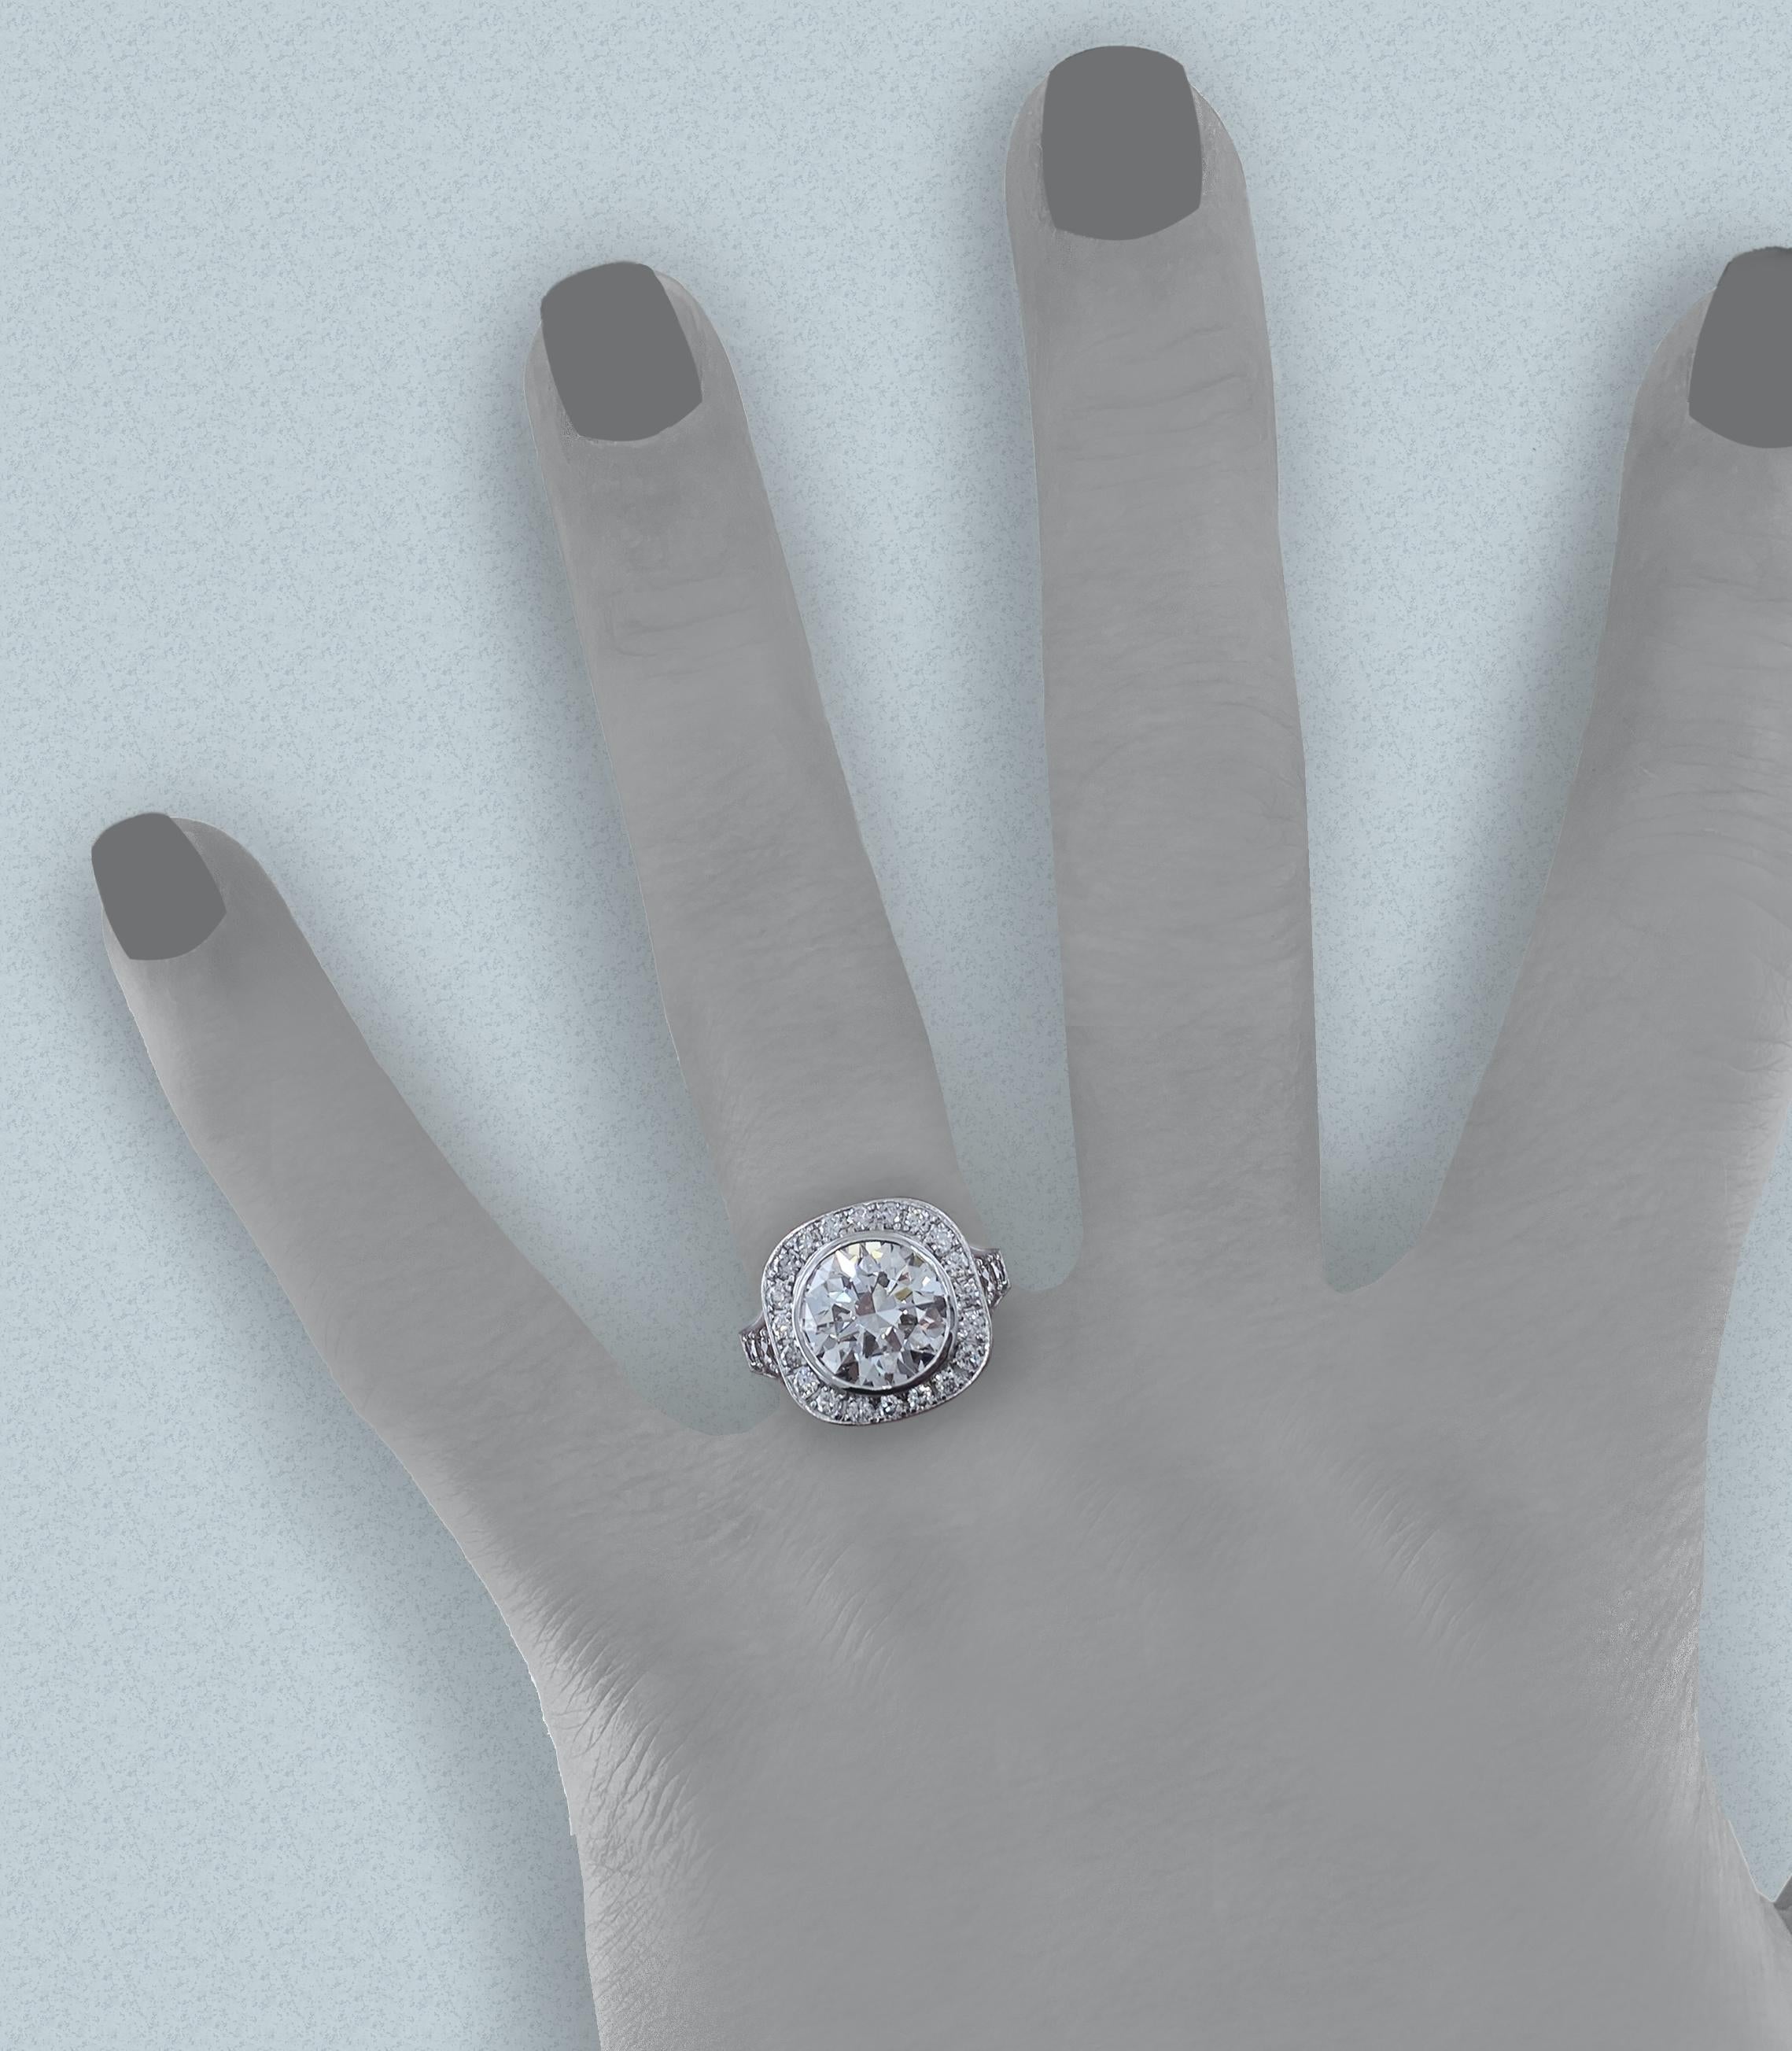 Brilliant Cut GIA-Certified 3.12 Carat E-VVS2 Diamond Engagement Ring in 18 Karat White Gold